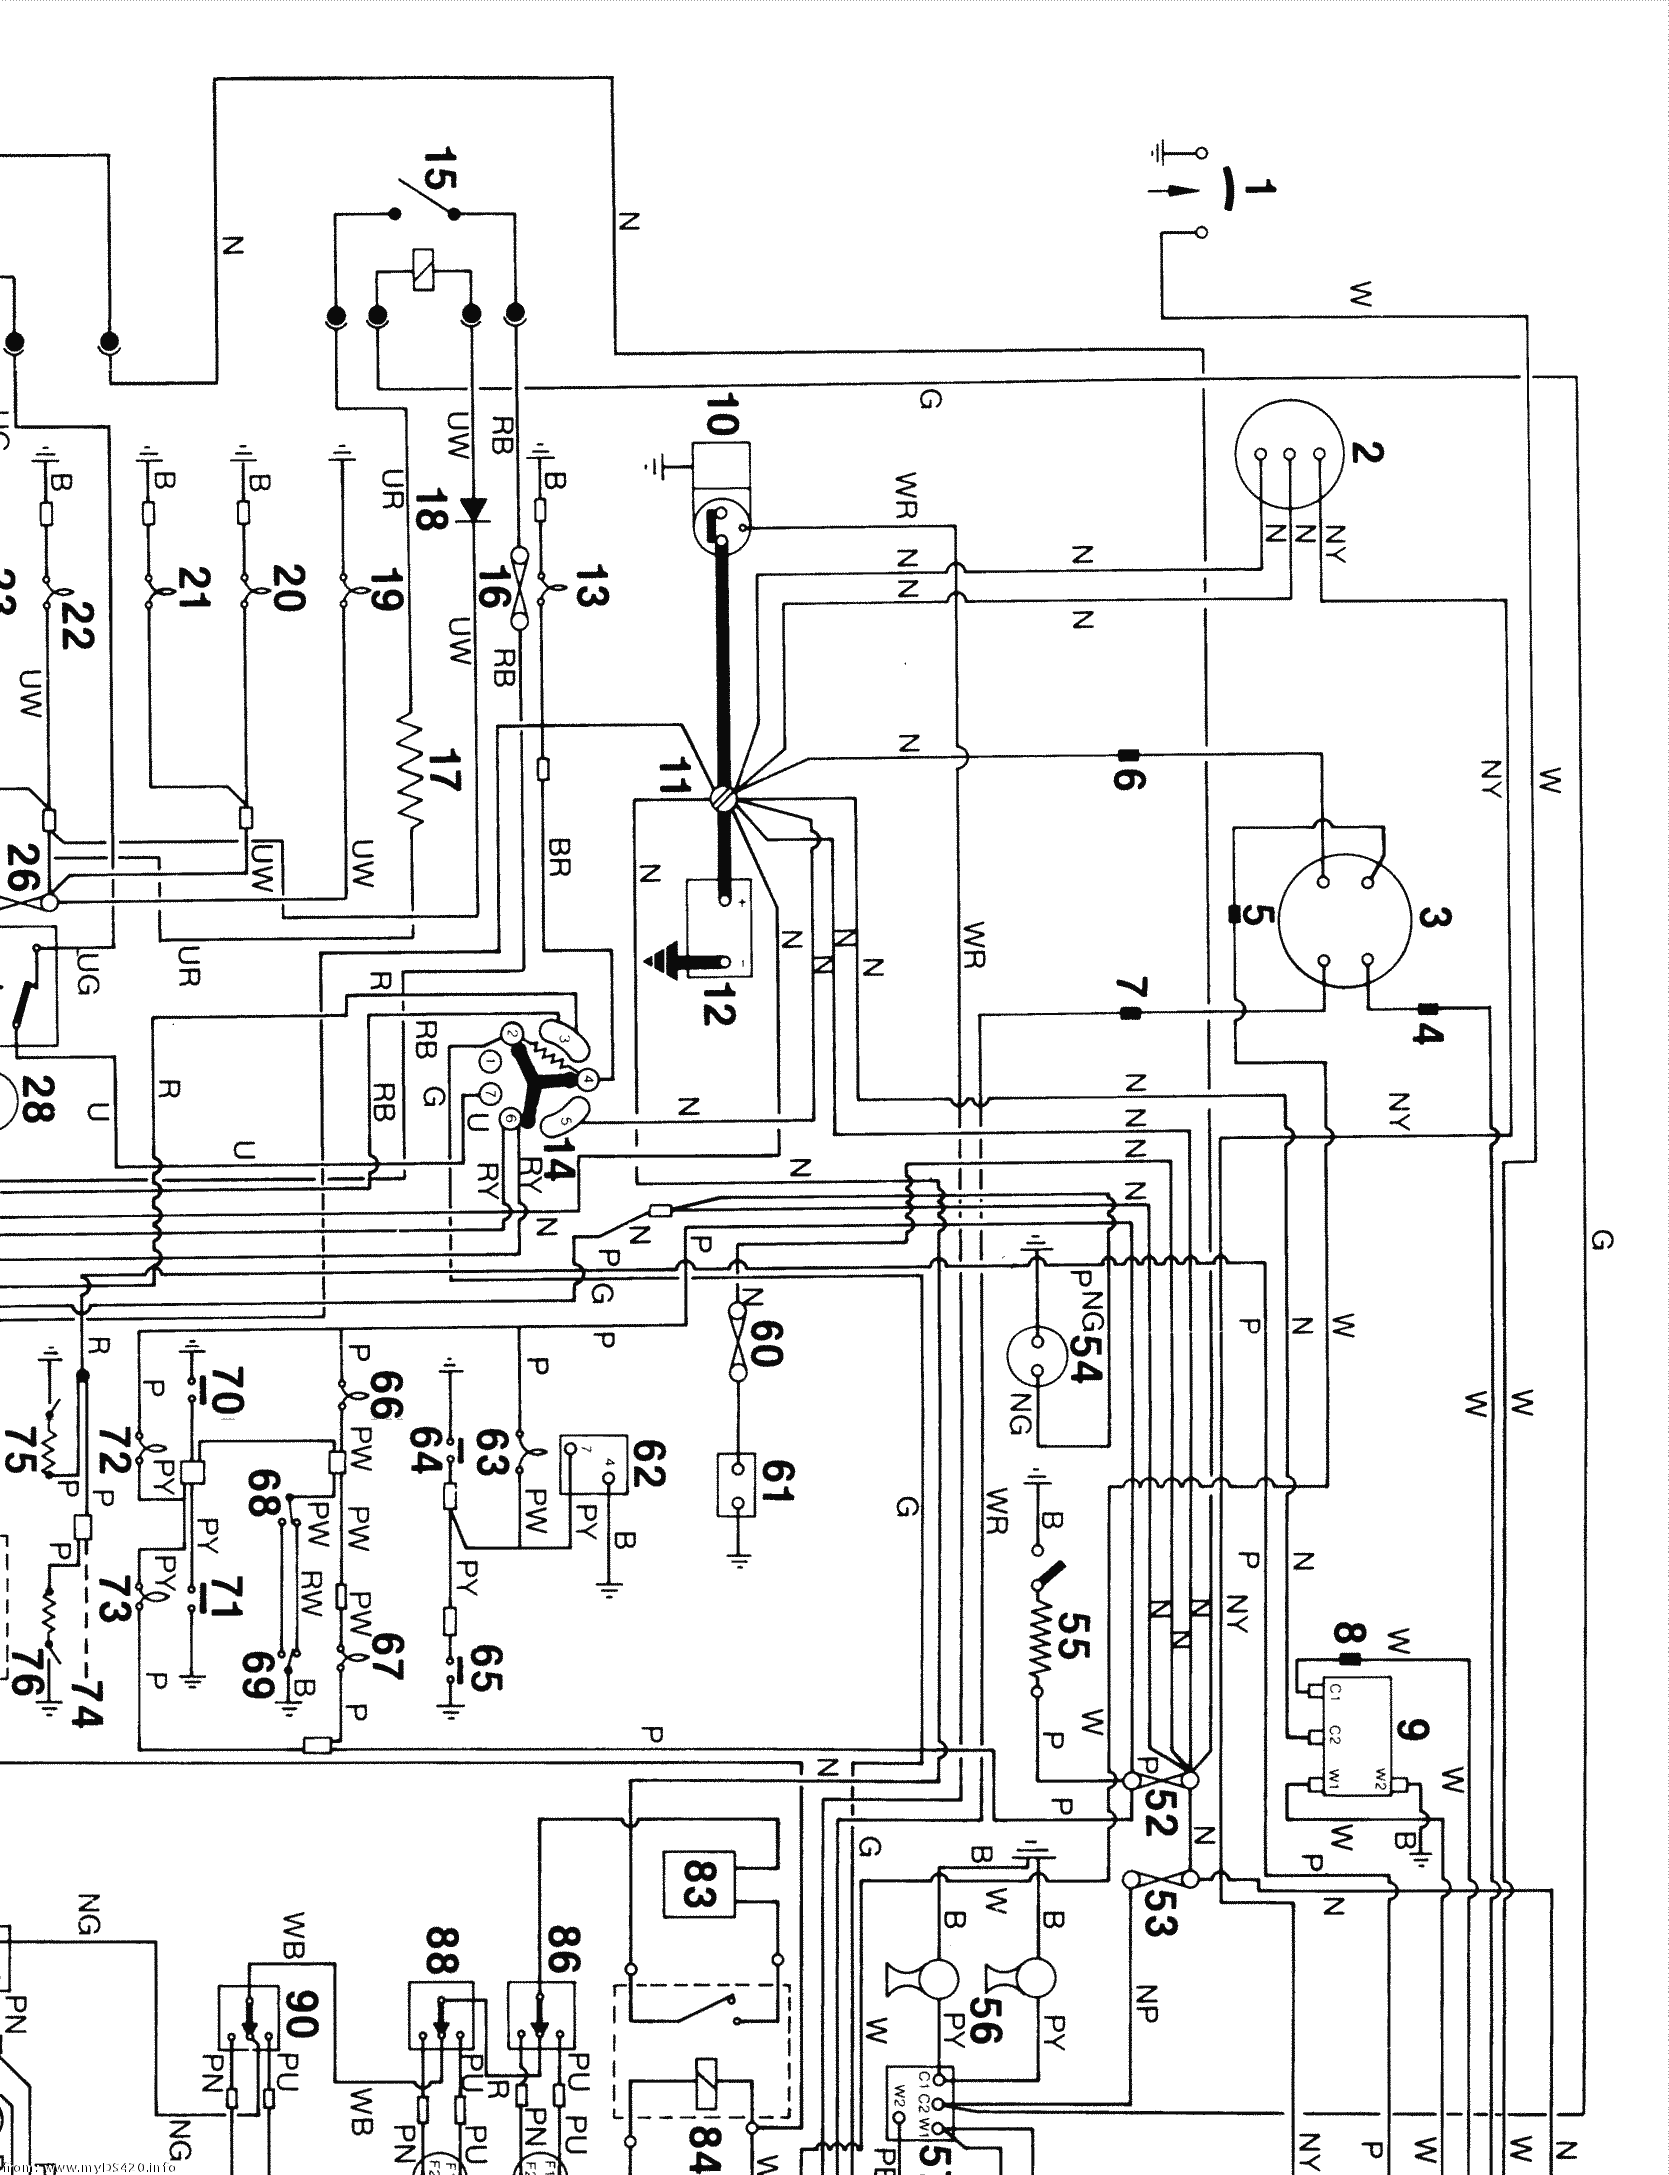 wiring diagram medium res. Ltr NW (1986)